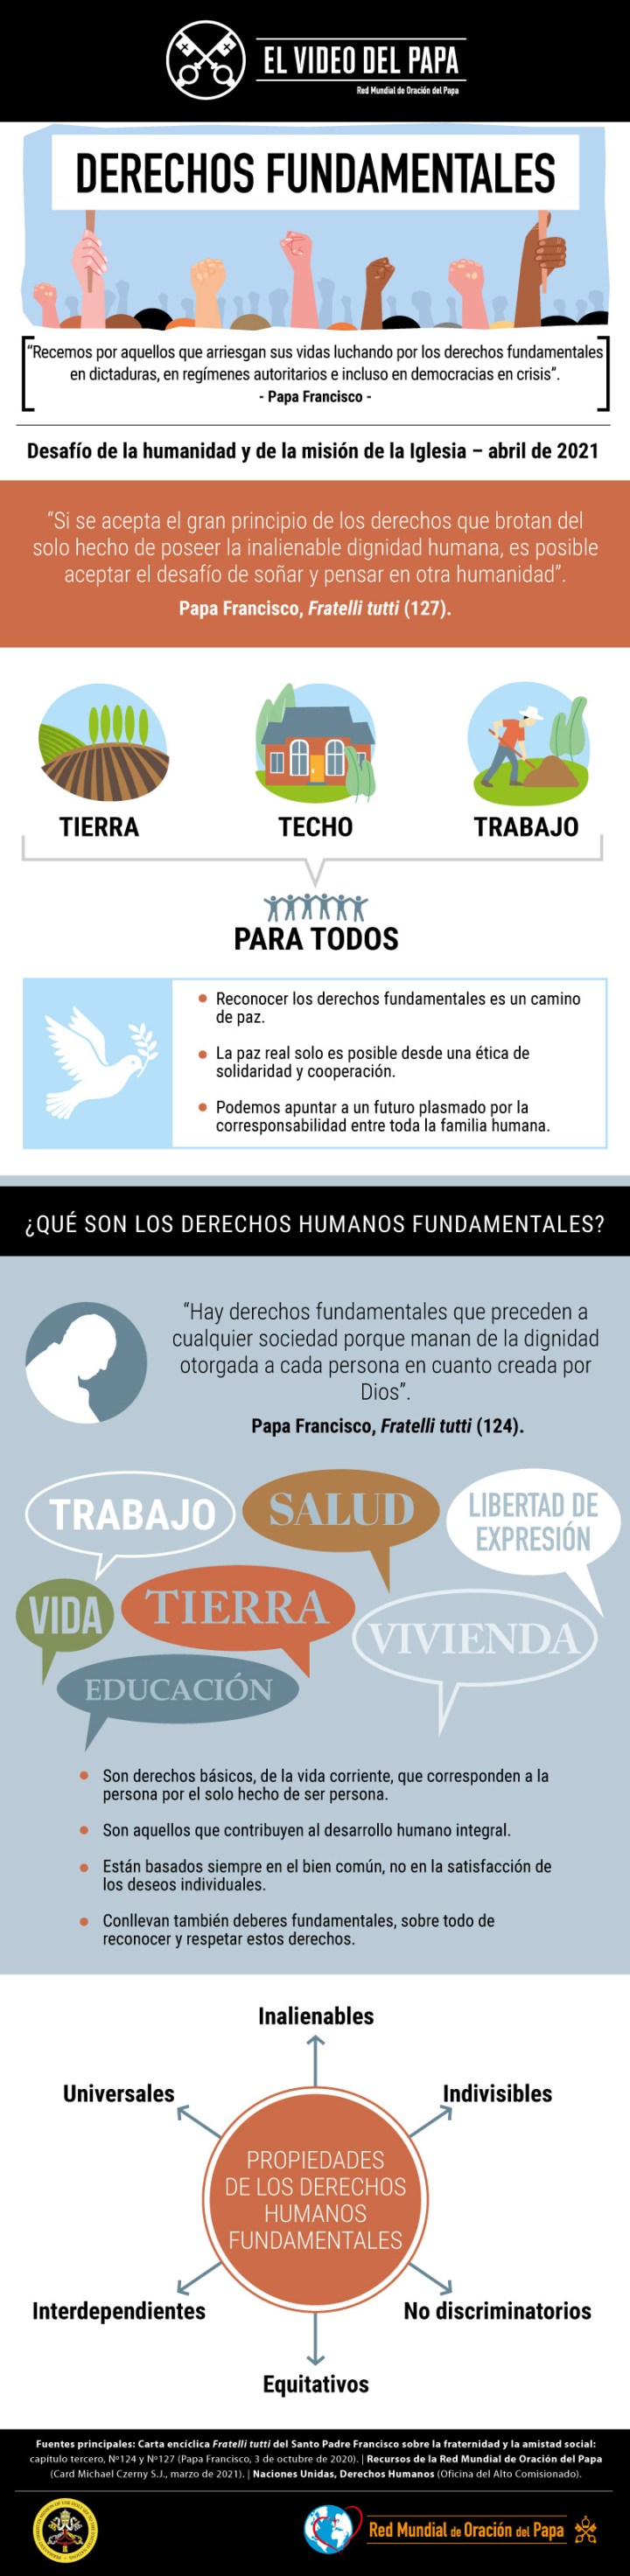 Infografia-TPV-4-2021-ES-Derechos-fundamentales.jpg